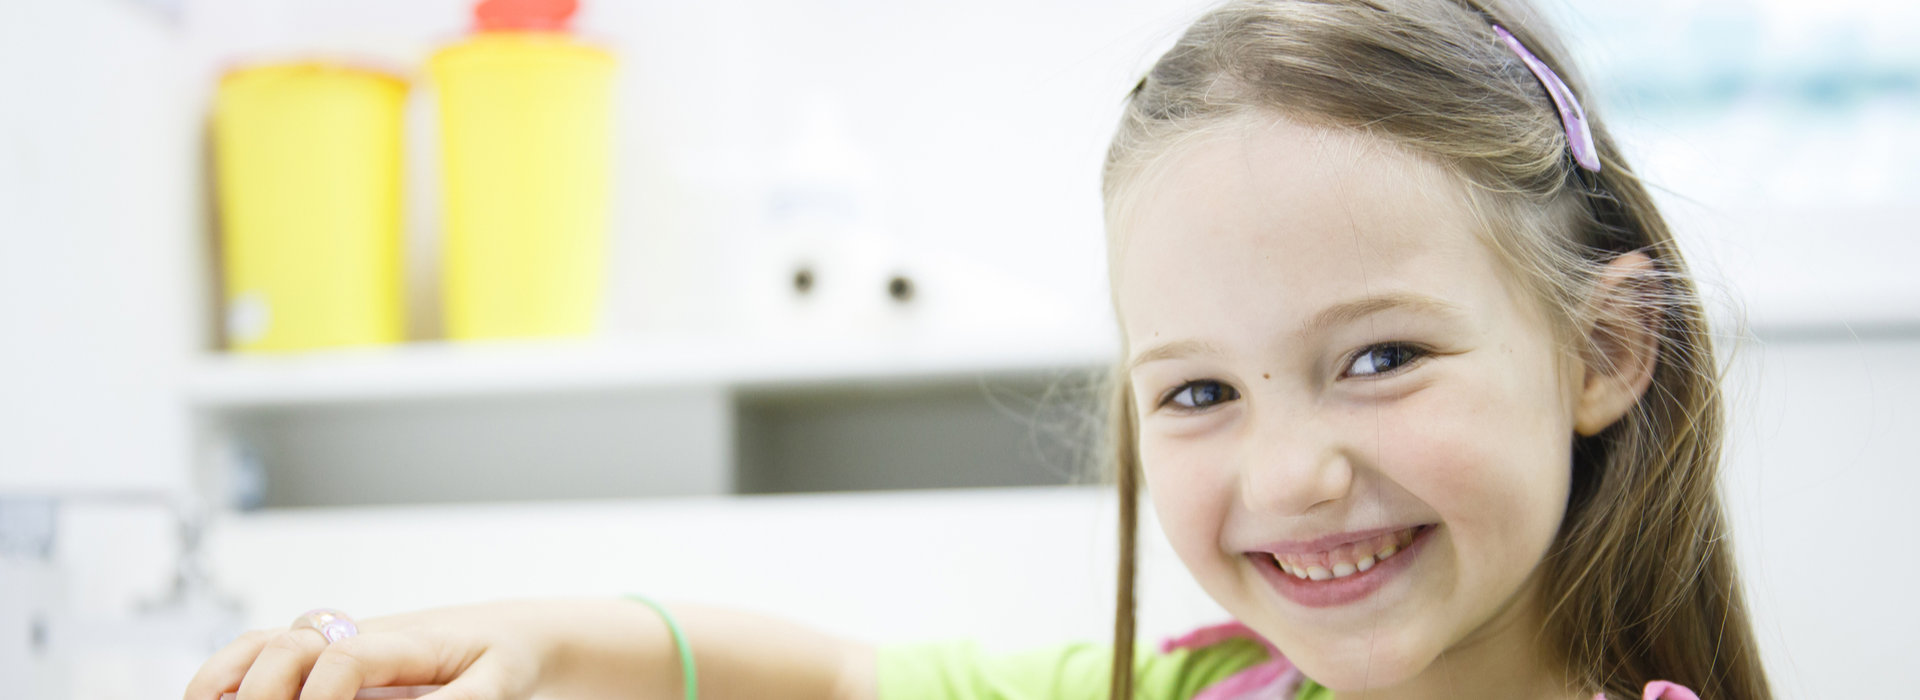 A child is smiling after Composite Dental Fillings.